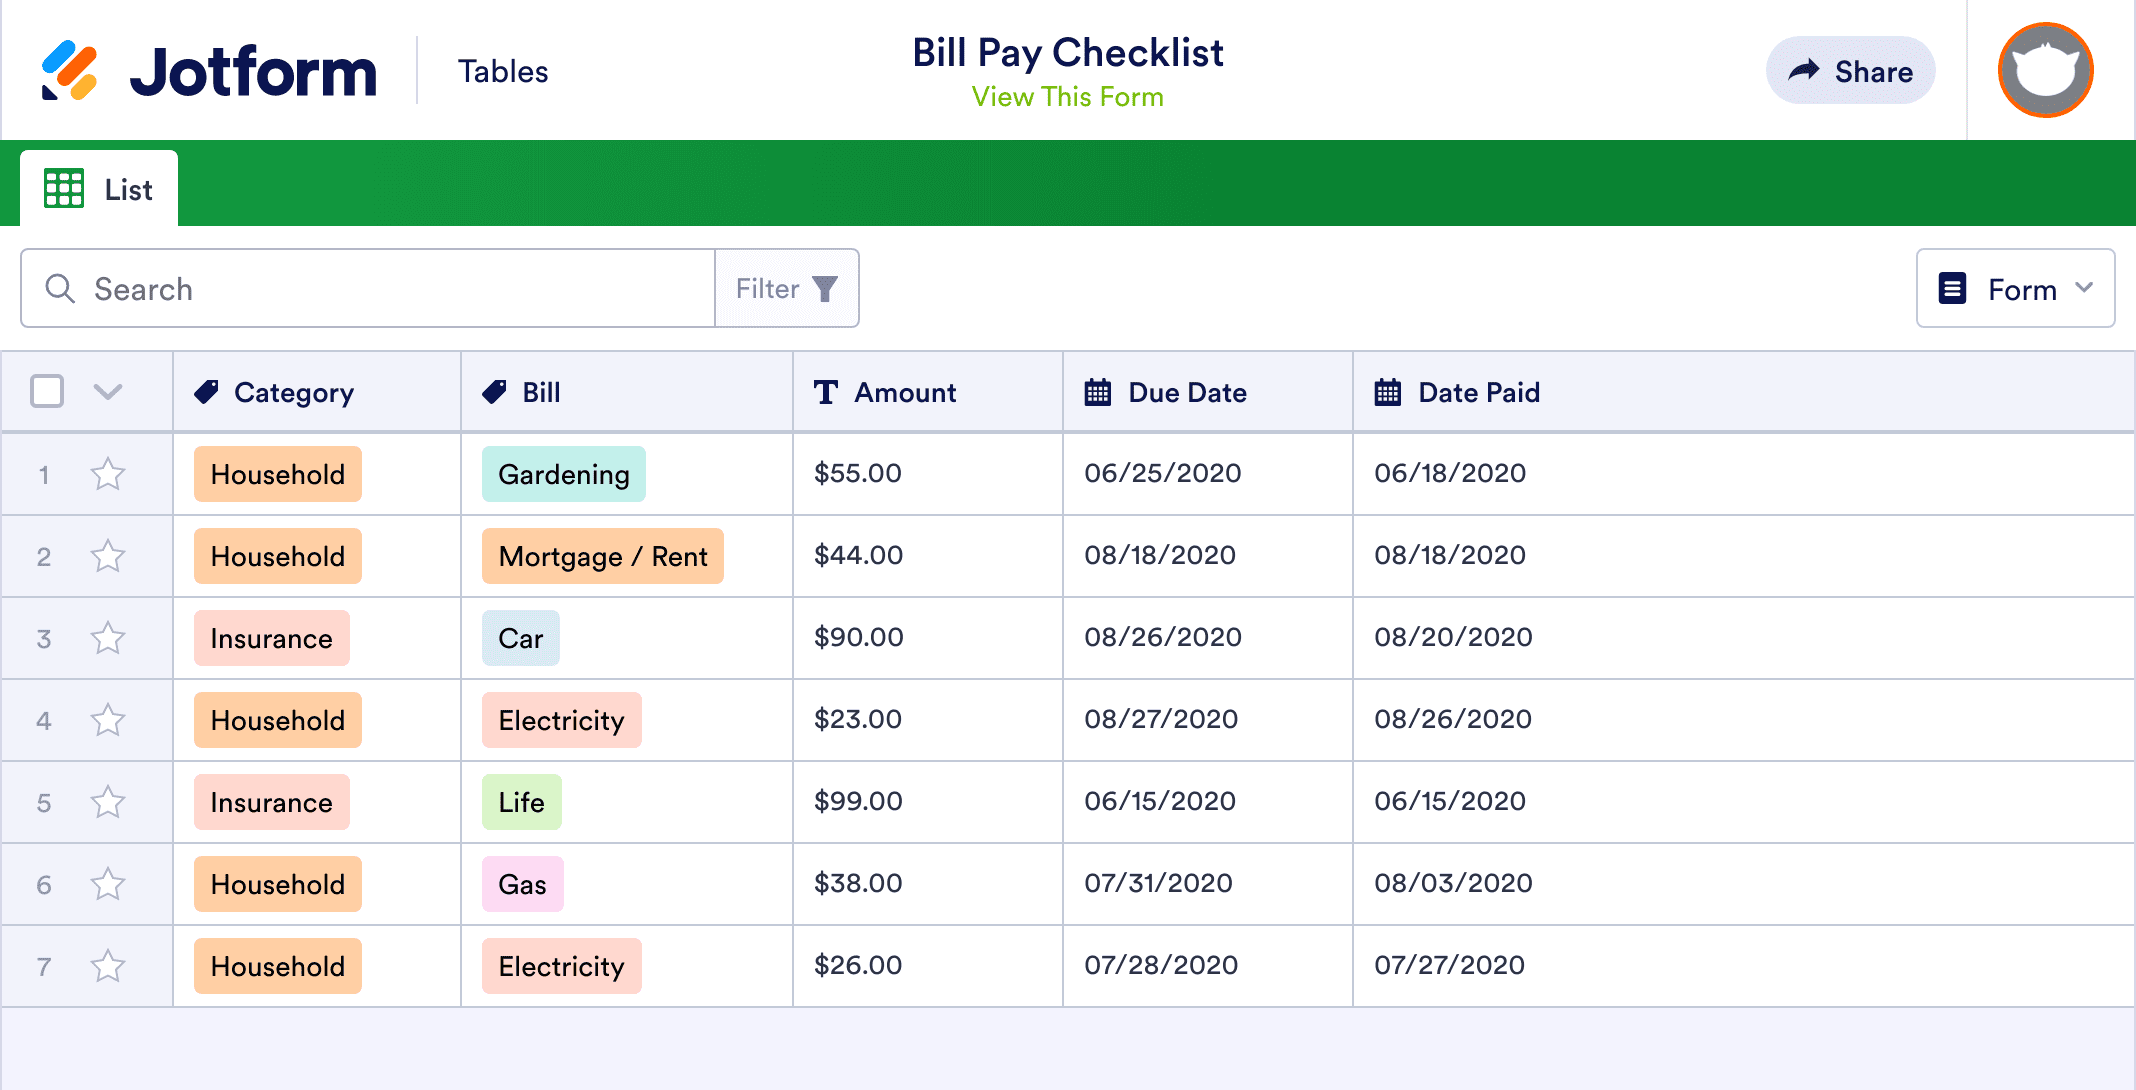 Bill Pay Checklist